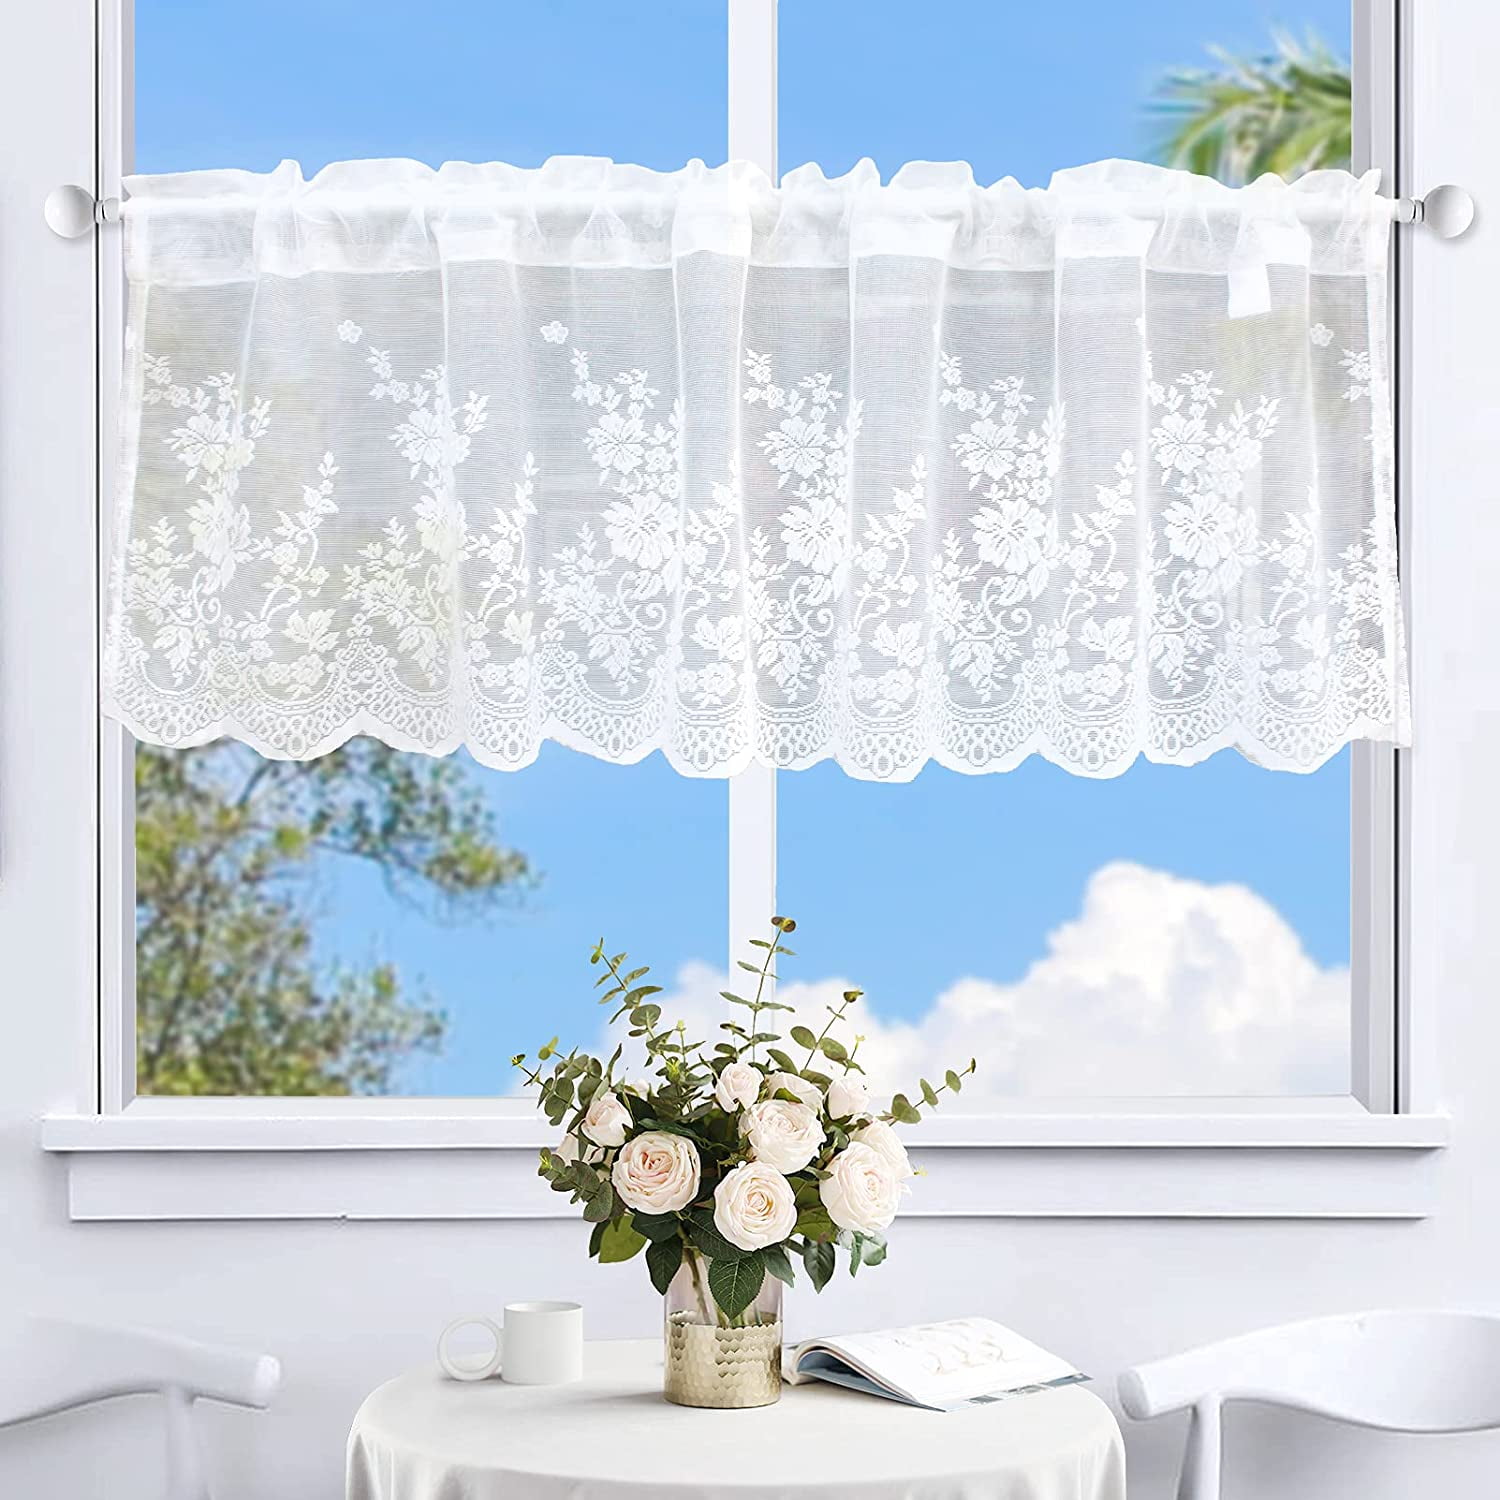 Curtain Panel Cafe Net Curtain Lace White Window Modern Decorative 